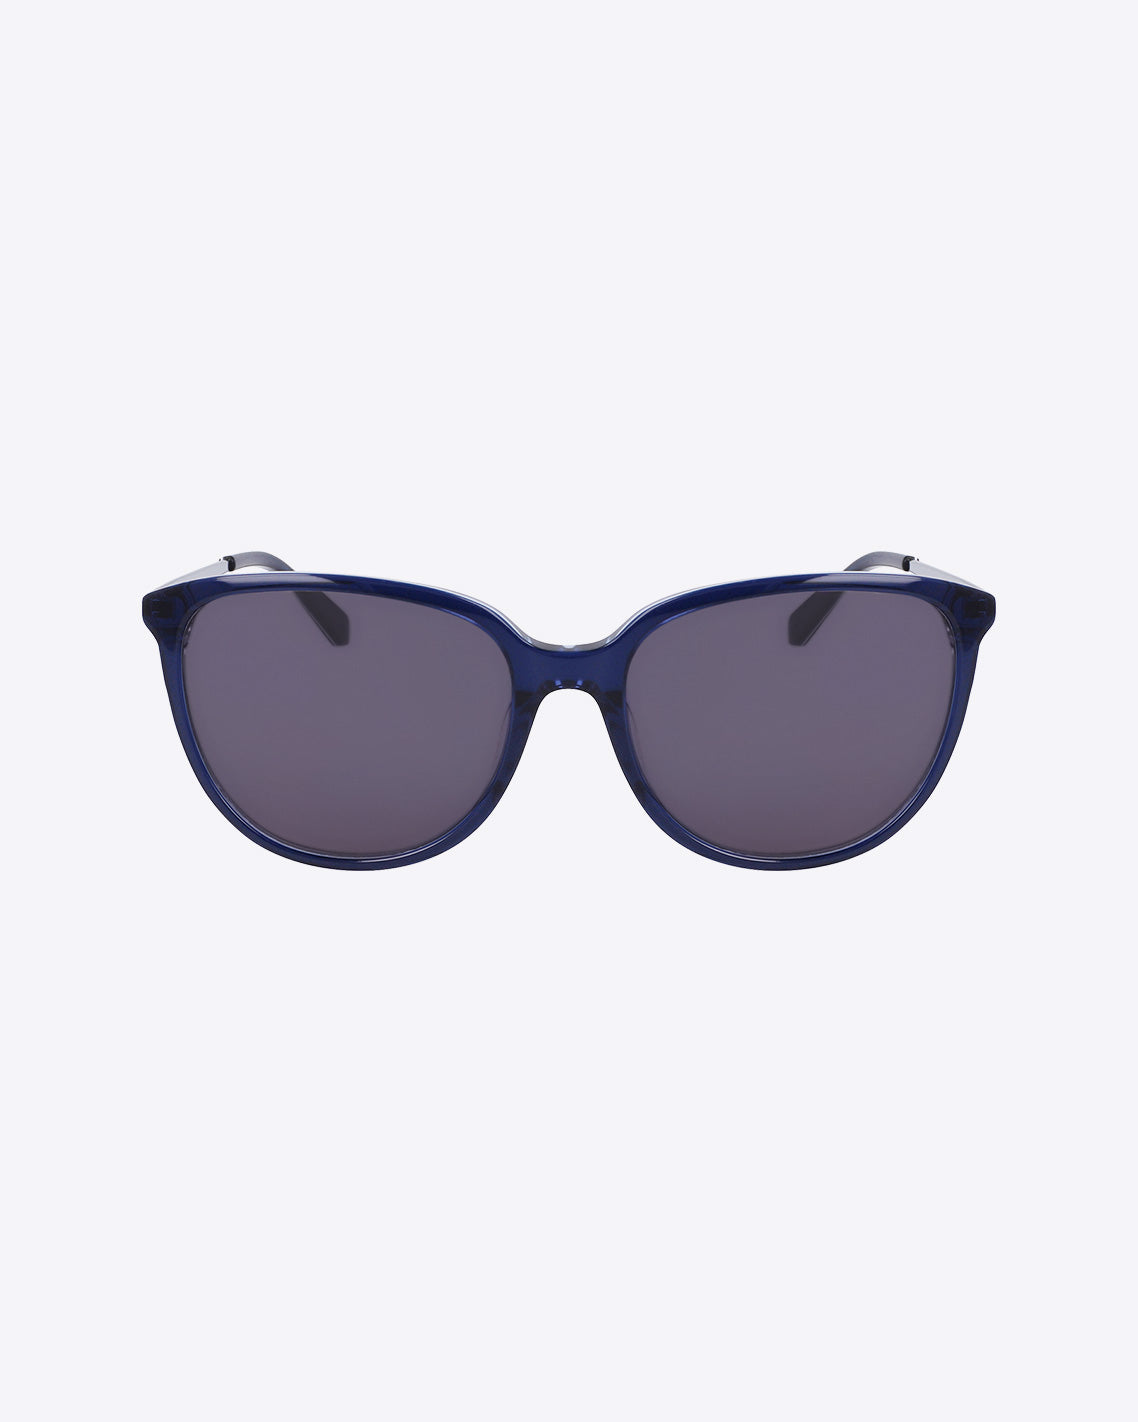 Hattie Sunglasses in Blue